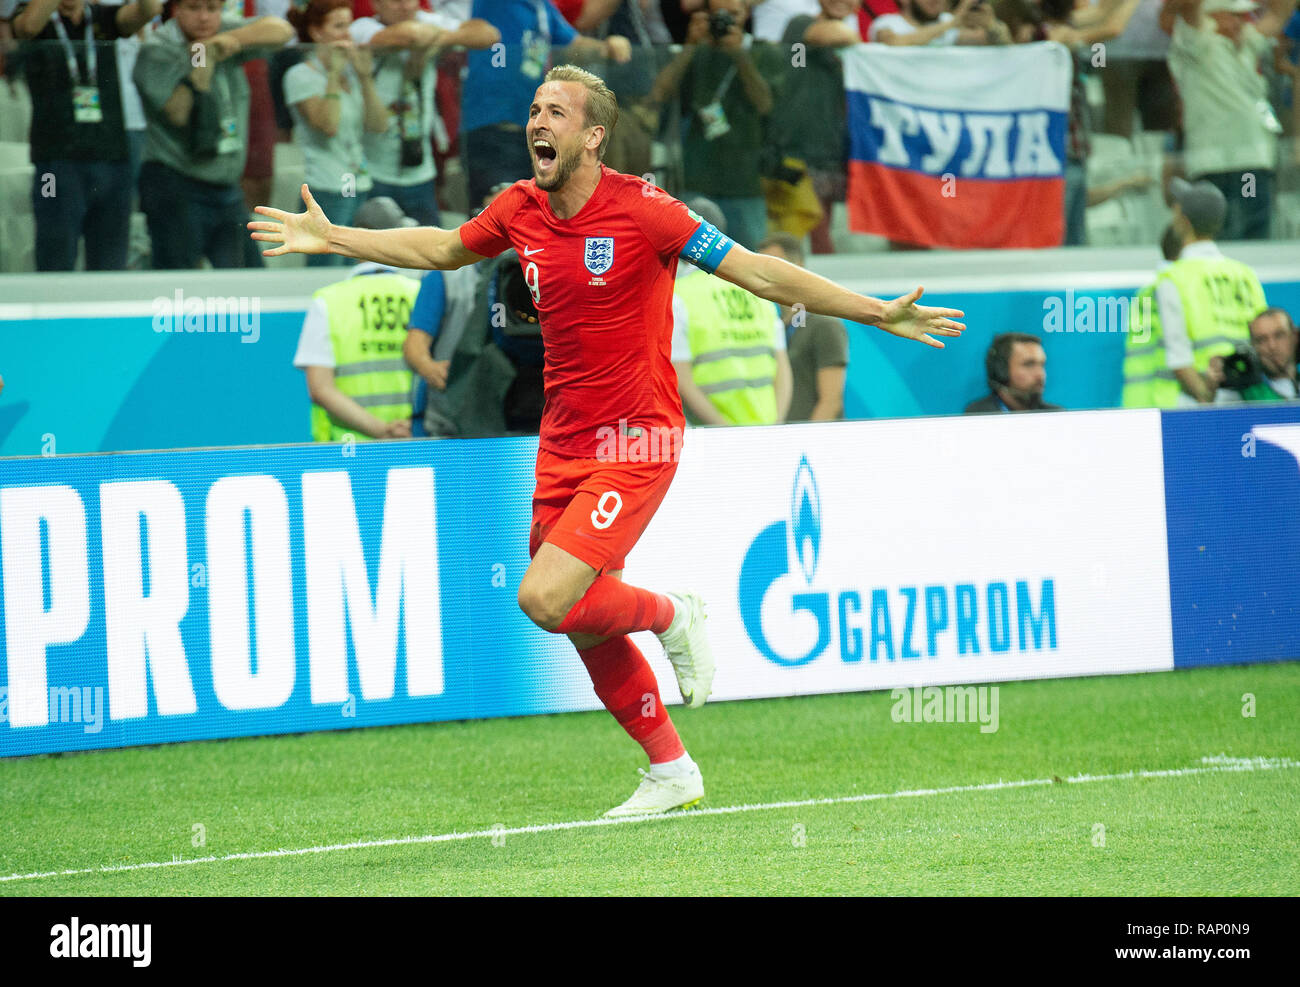 HARRY KANE celebra hoy su segundo gol en la Copa del Mundo de 2018 contra Túnez. Imagen JEREMY SELWYN 18/06/2018 Foto de stock